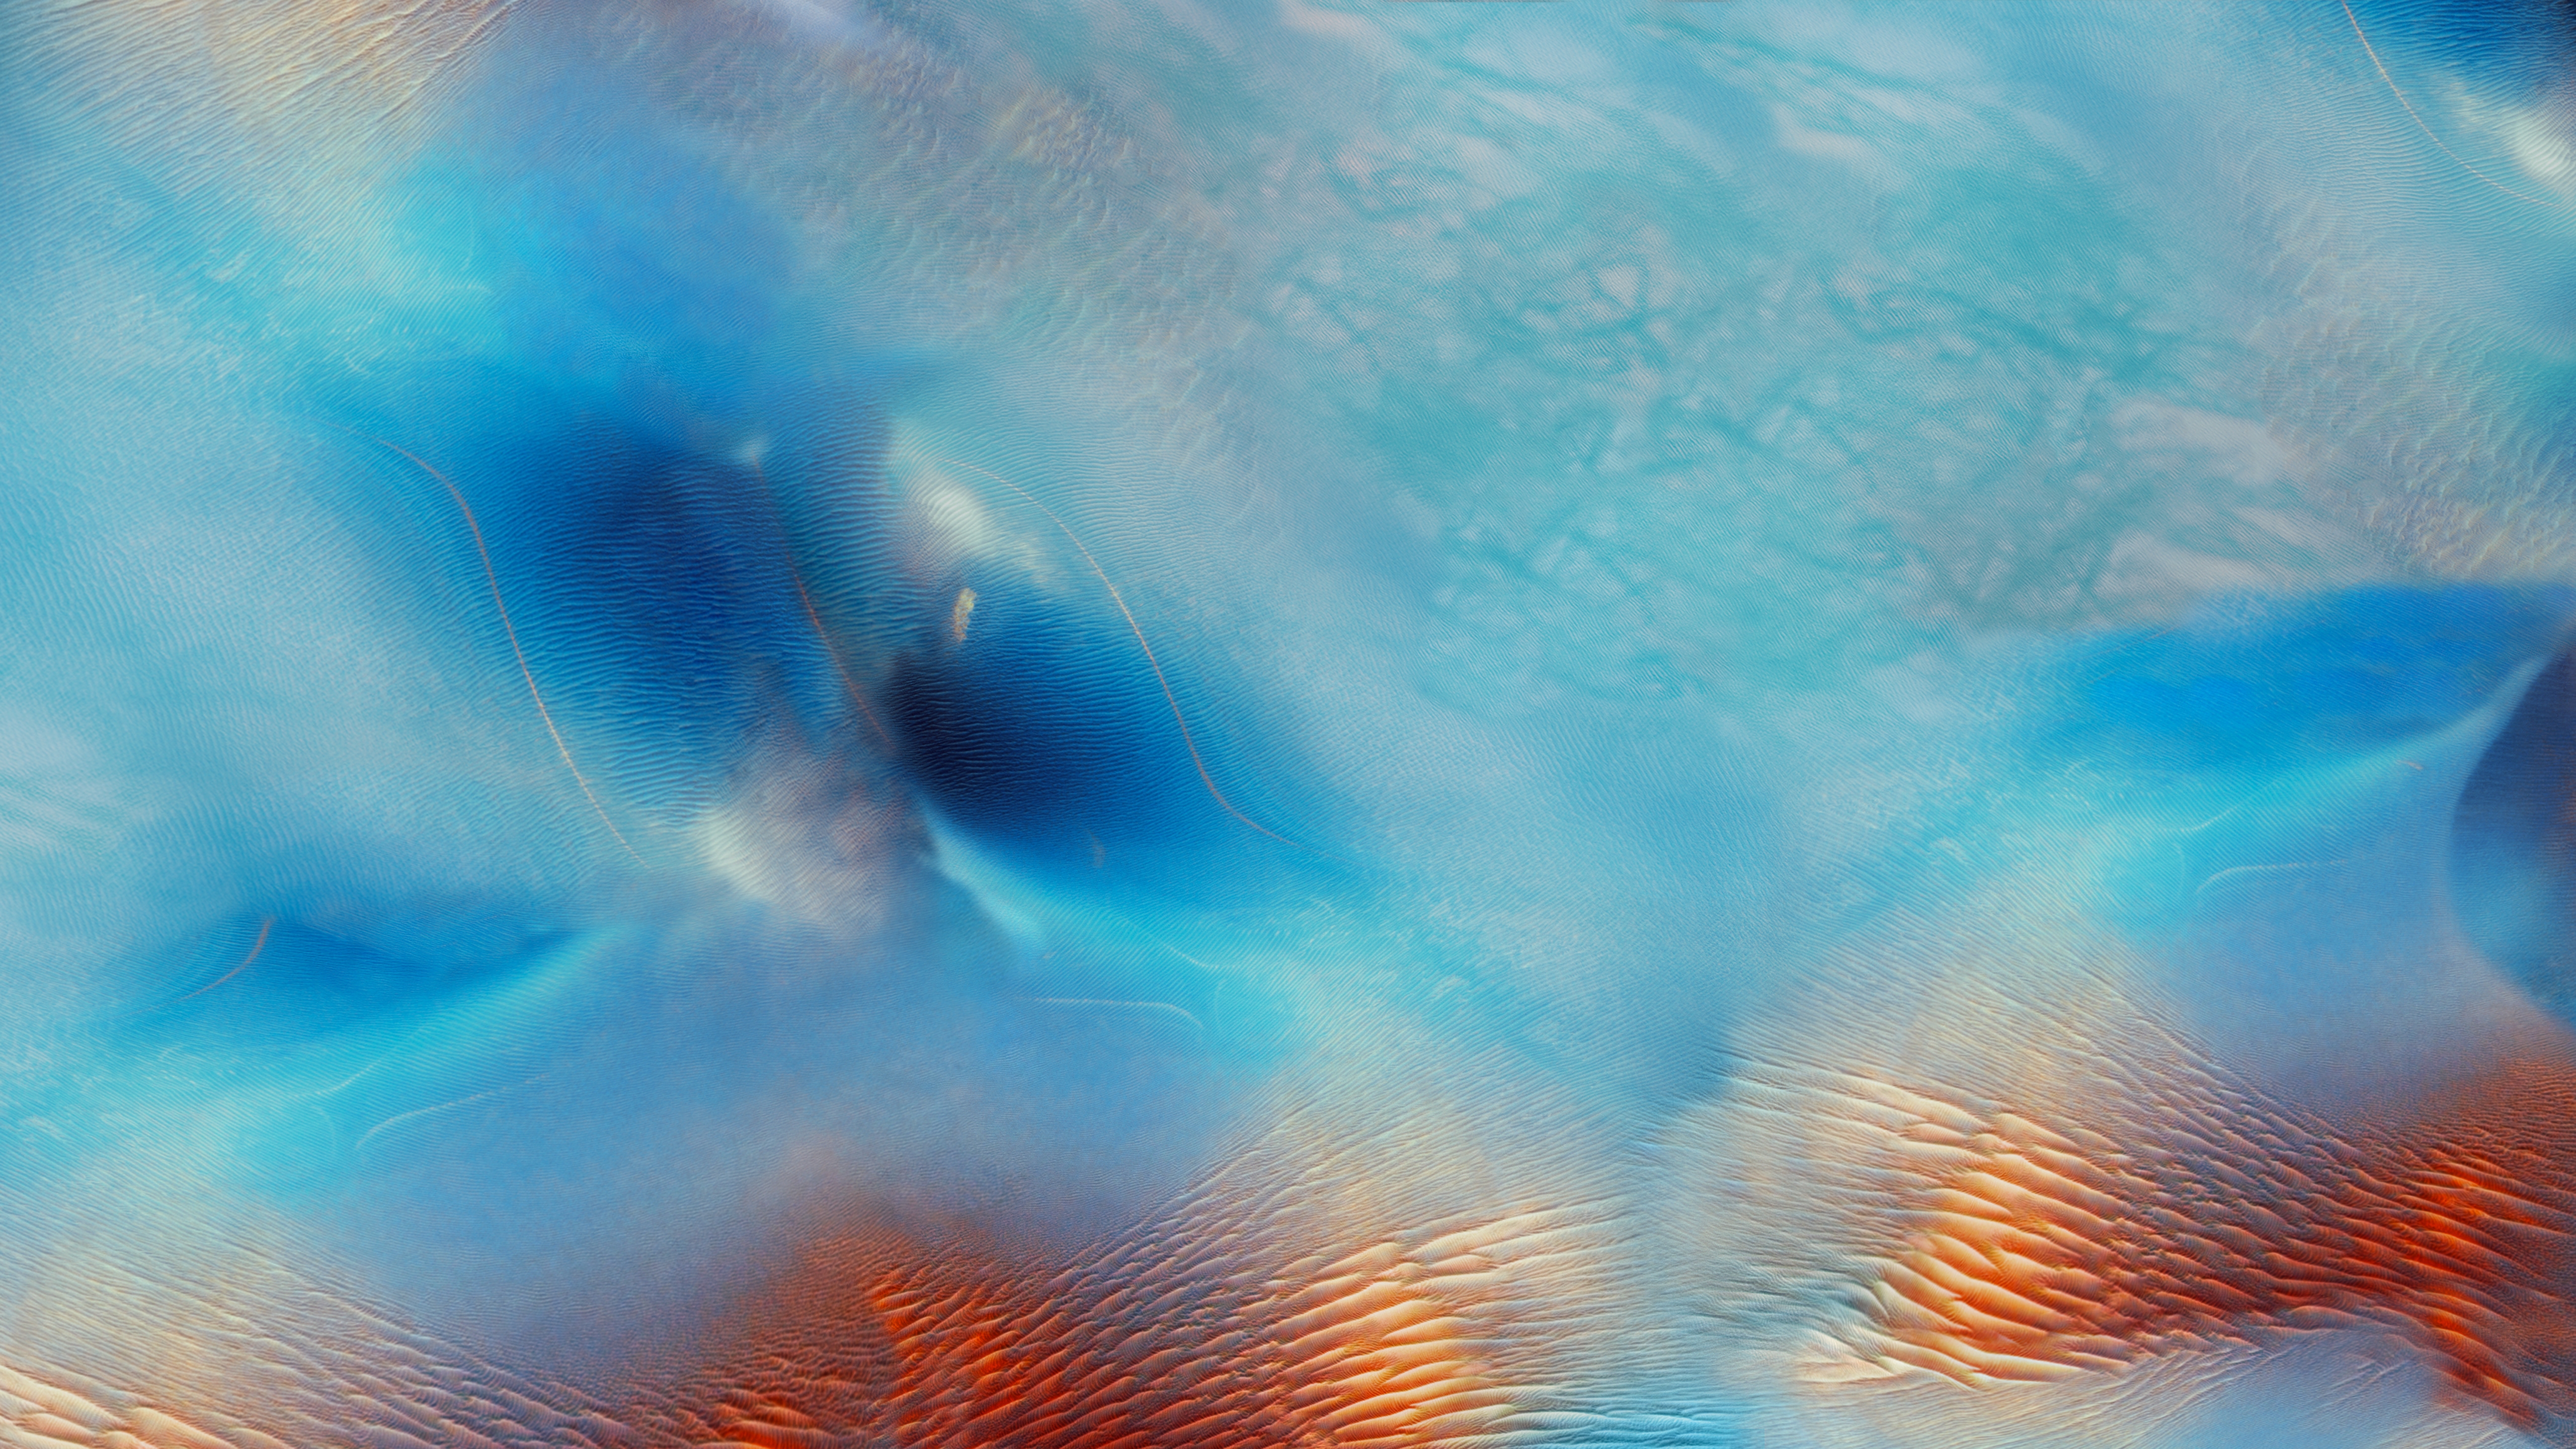 HD wallpaper, 5K, Retina, Ios 9, Blue, Sand Dunes, Waves, Aerial View, Desert